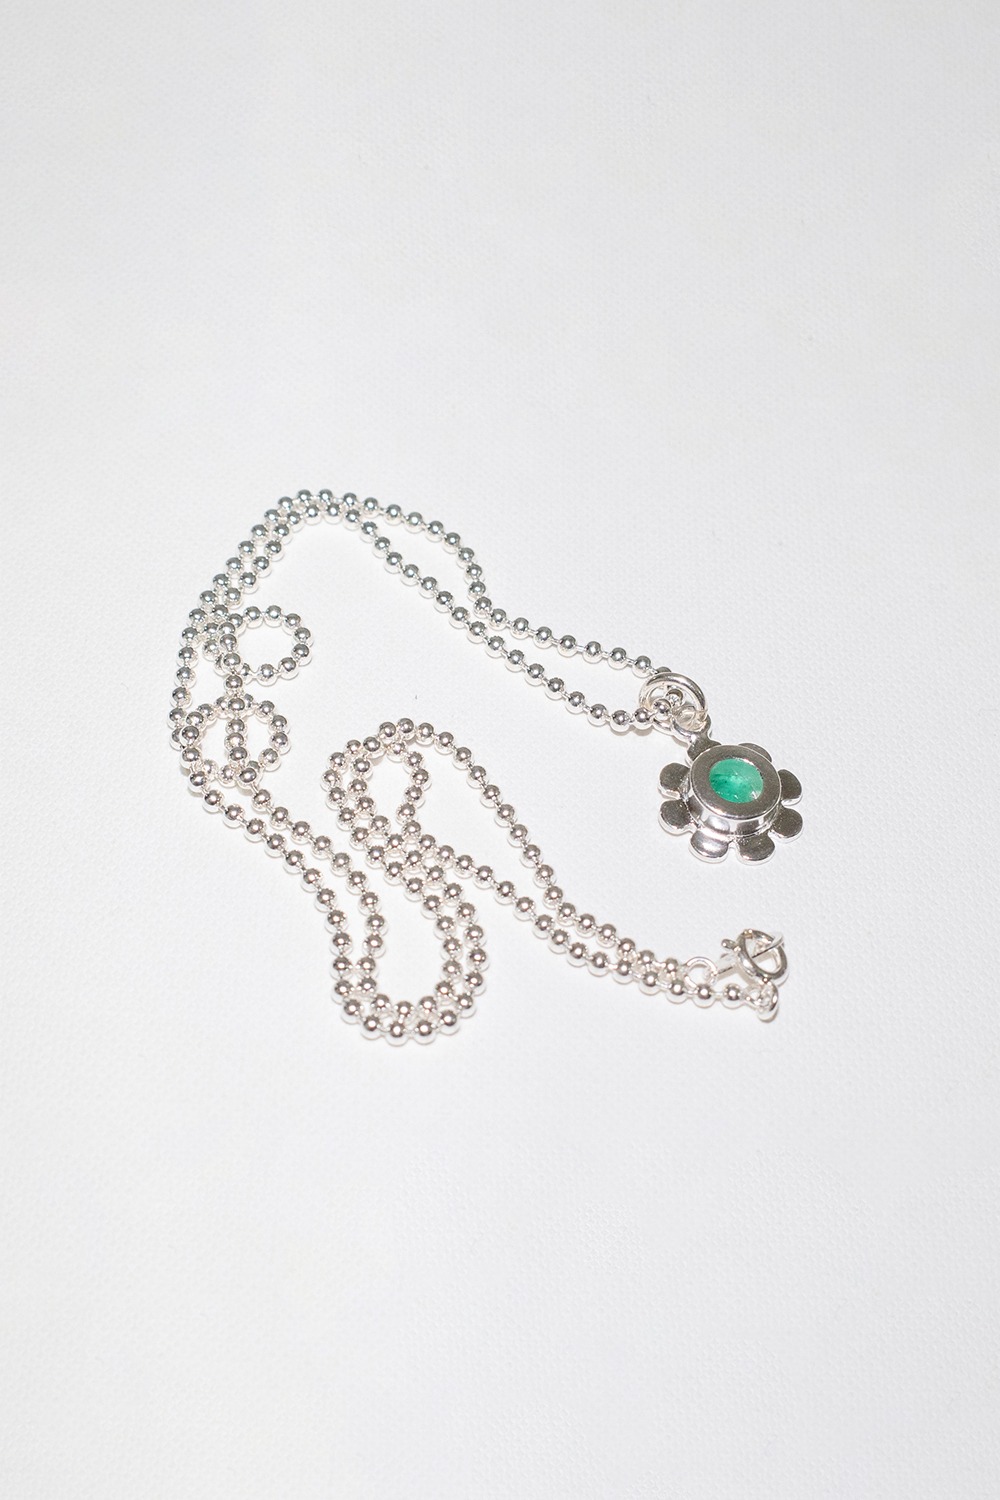 HOTDRYGREY_Flower necklace 01